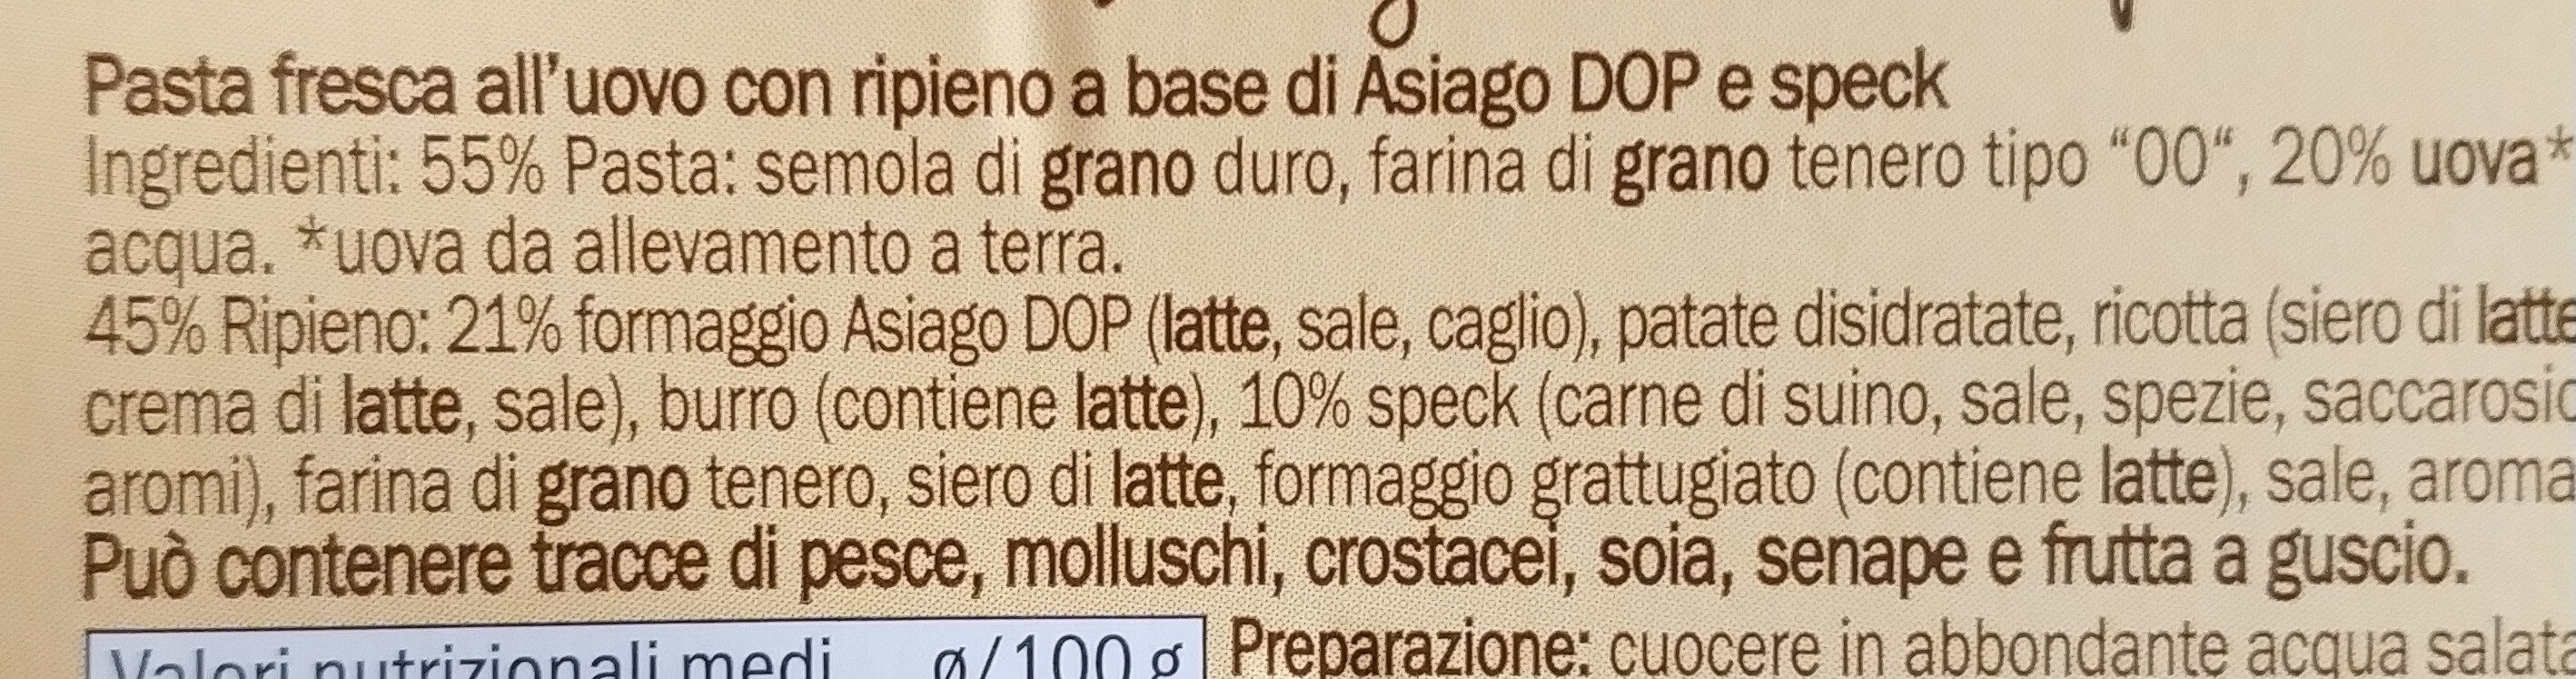 Tortelloni con Asiago DOP e speck - Ingredienti